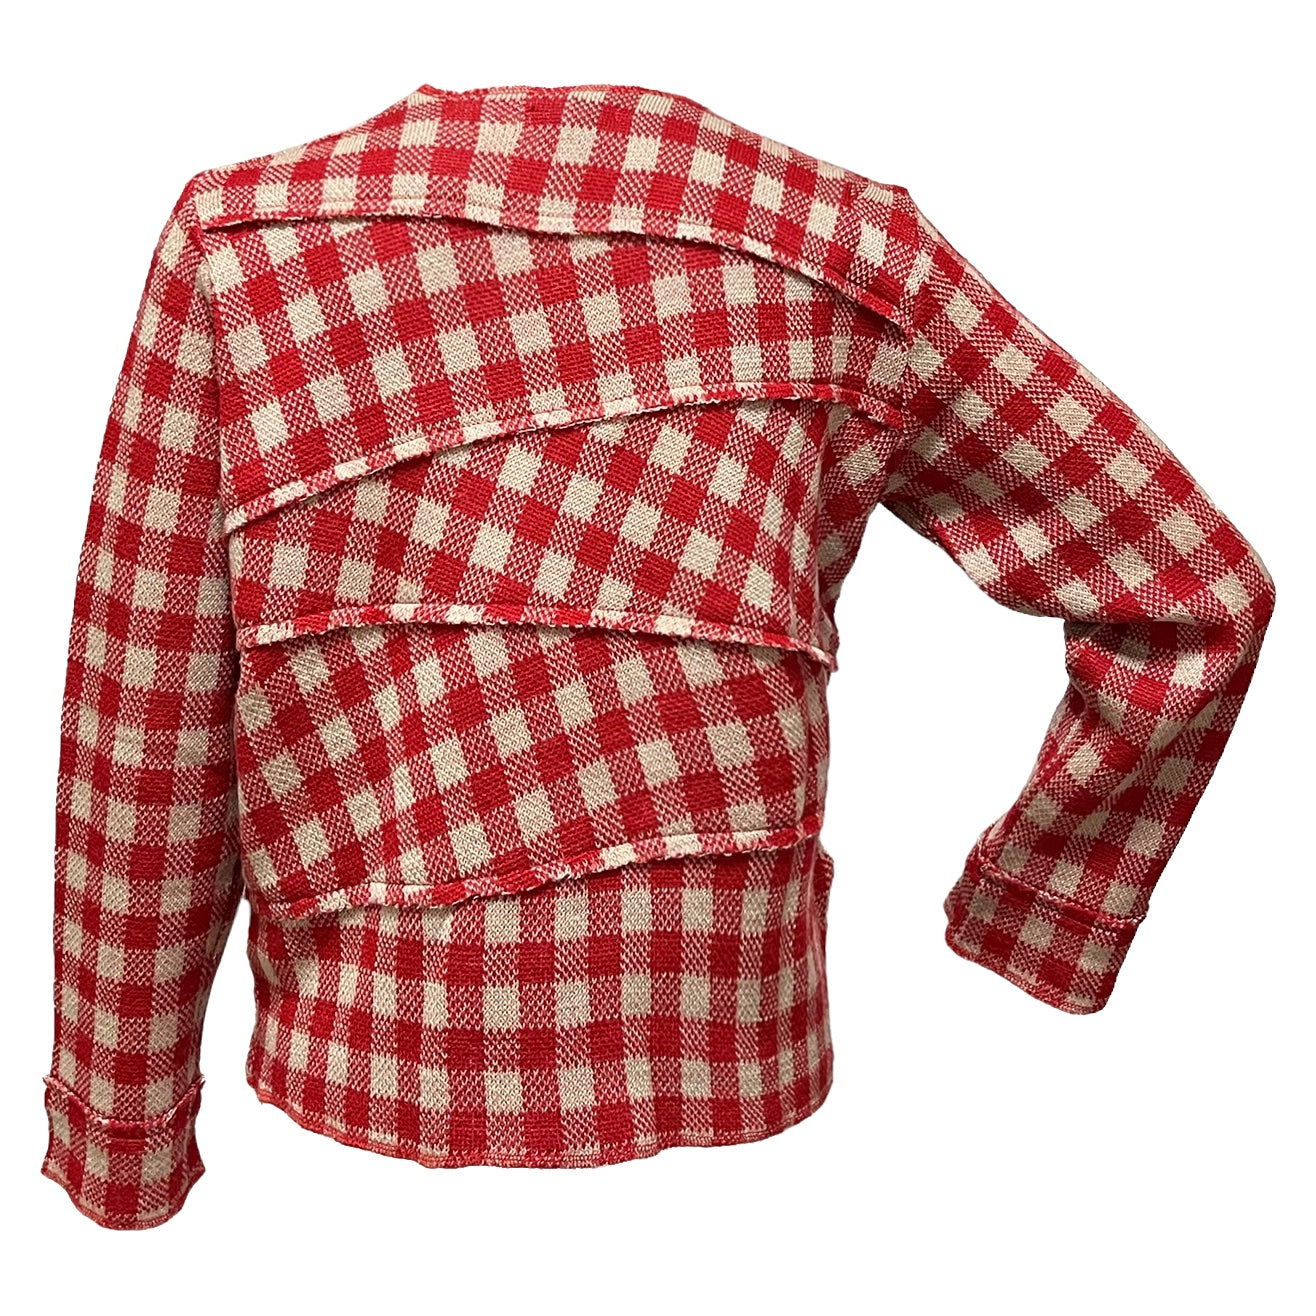 TRICOT COMME DES GARÇONS Checkered Knit Sweater